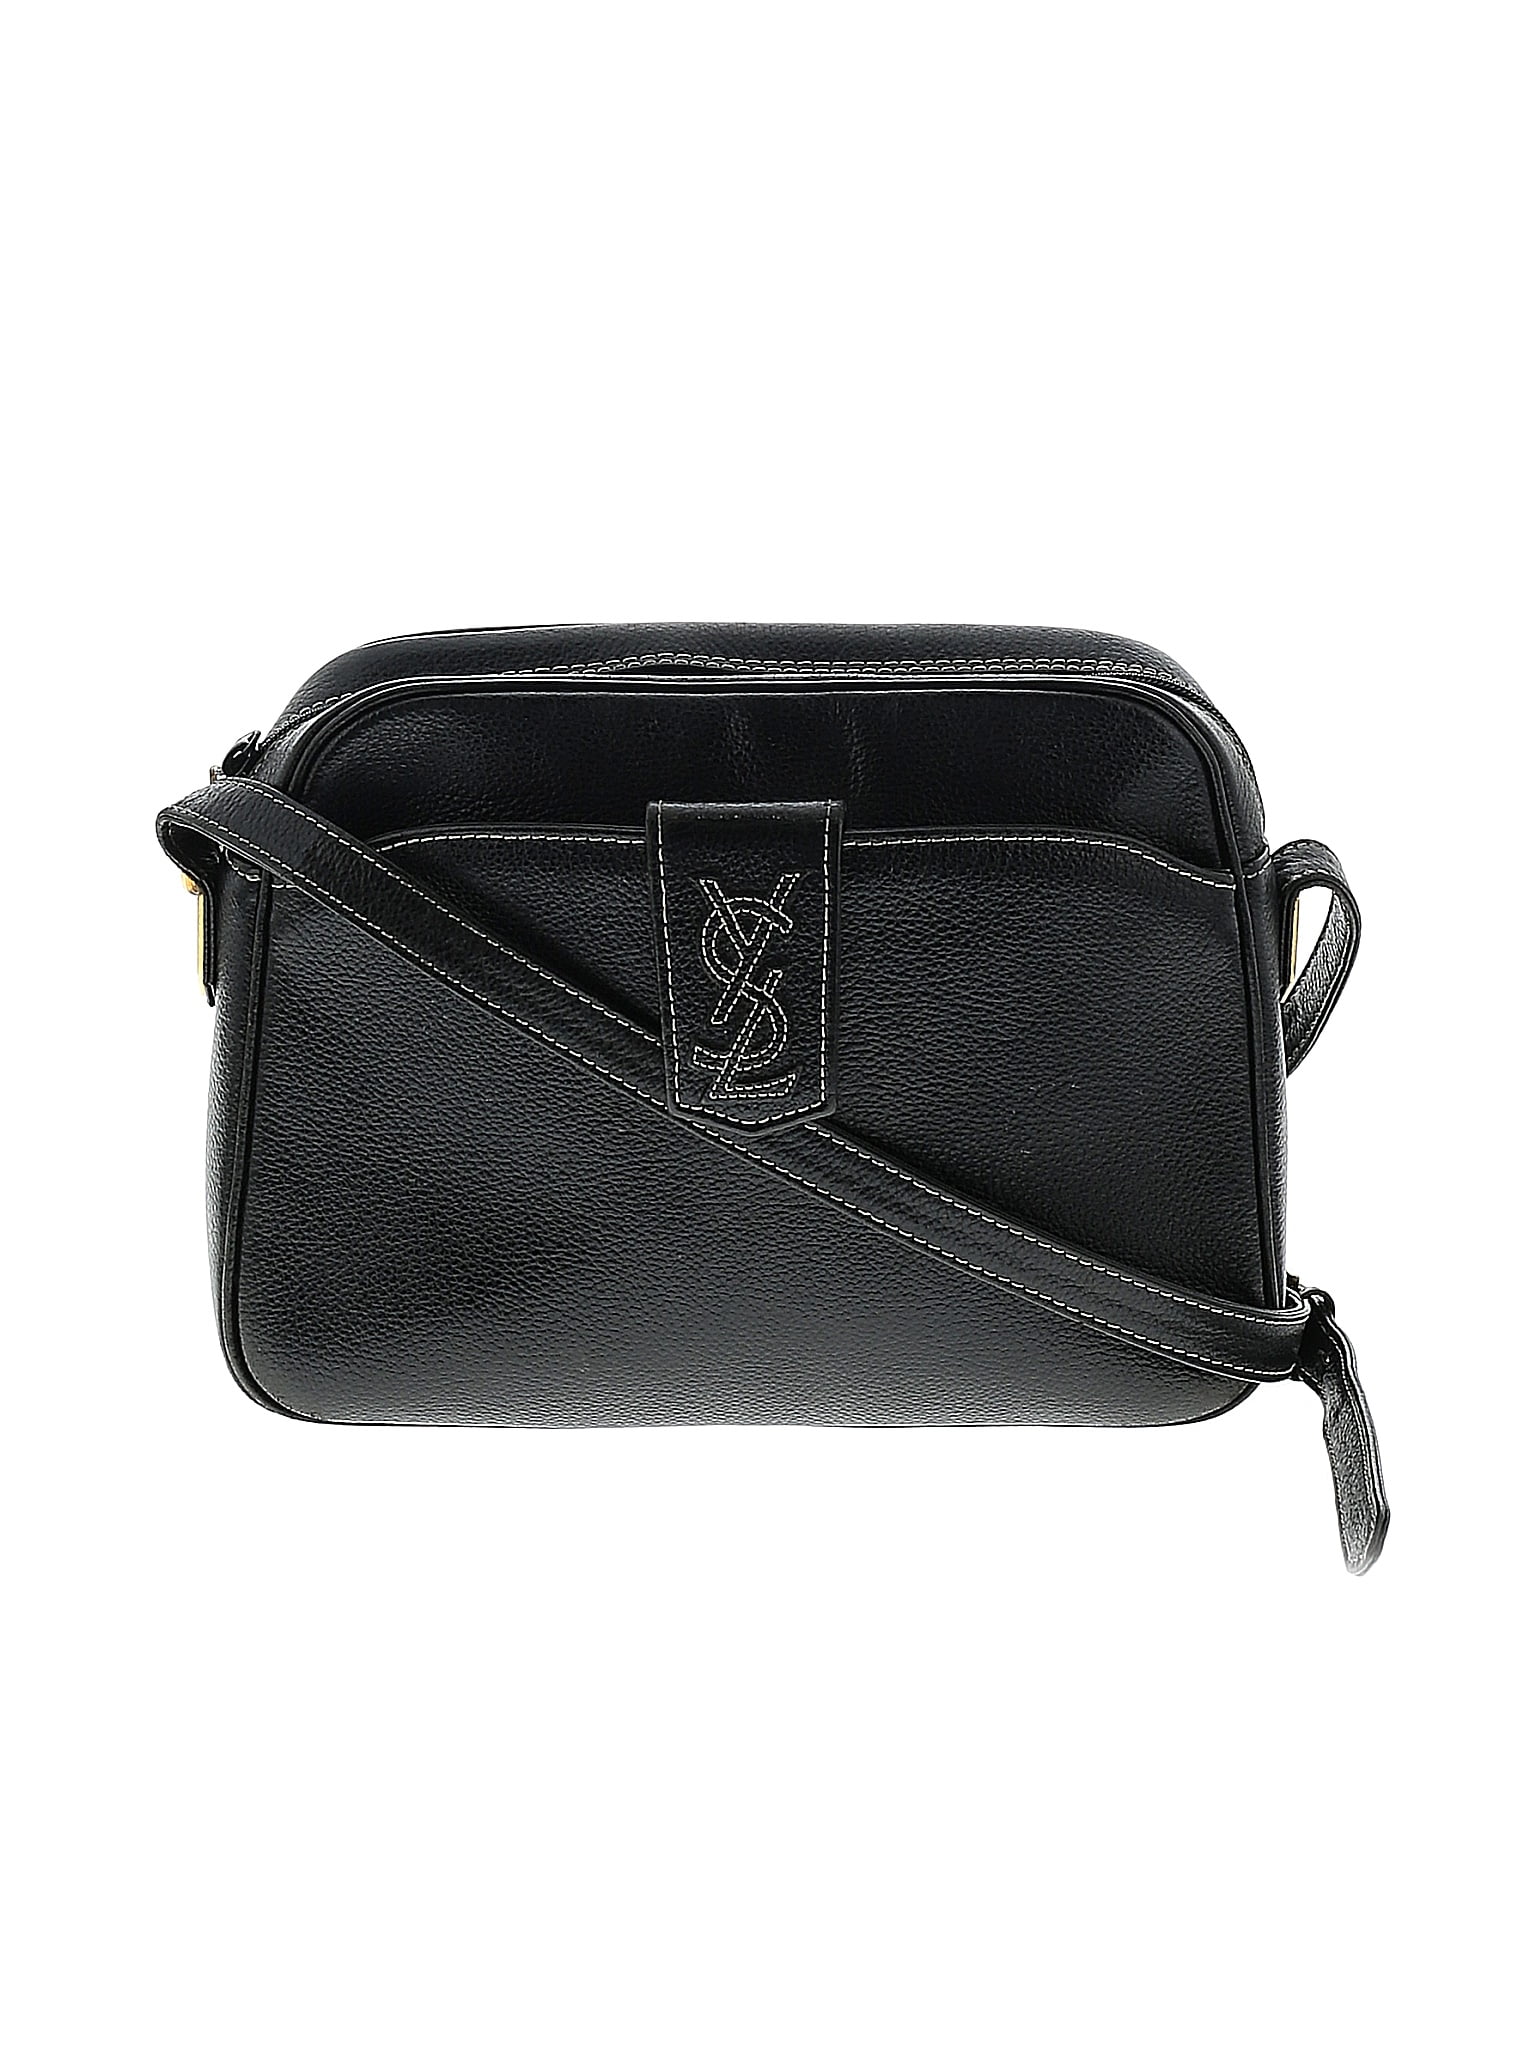 Yves Saint Laurent Belle Du Jour leather iPad sleeve